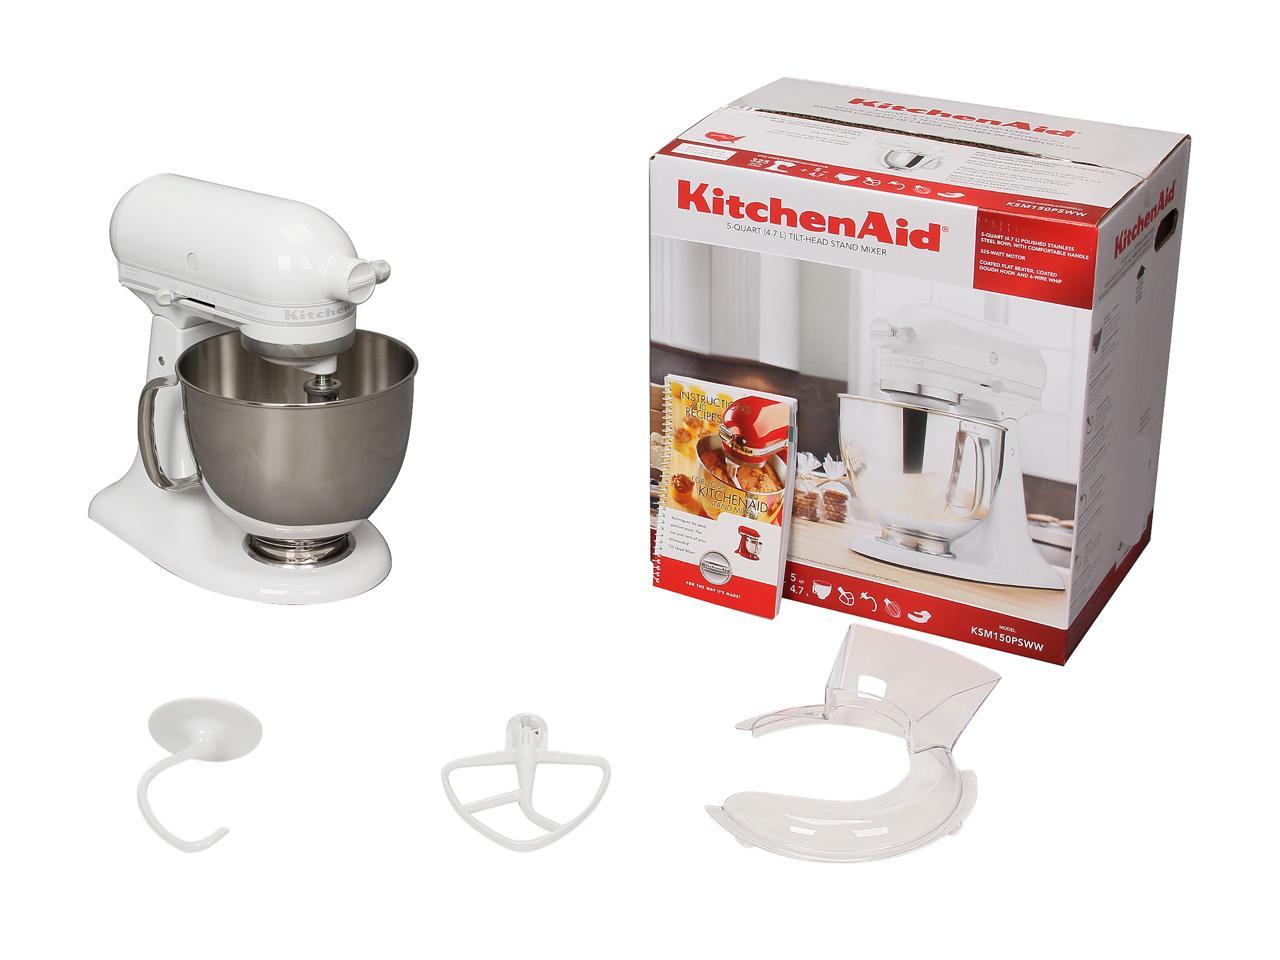 KitchenAid KSM150PSWW Artisan Series 5-Qt Stand Mixer with Pouring Shield White On White